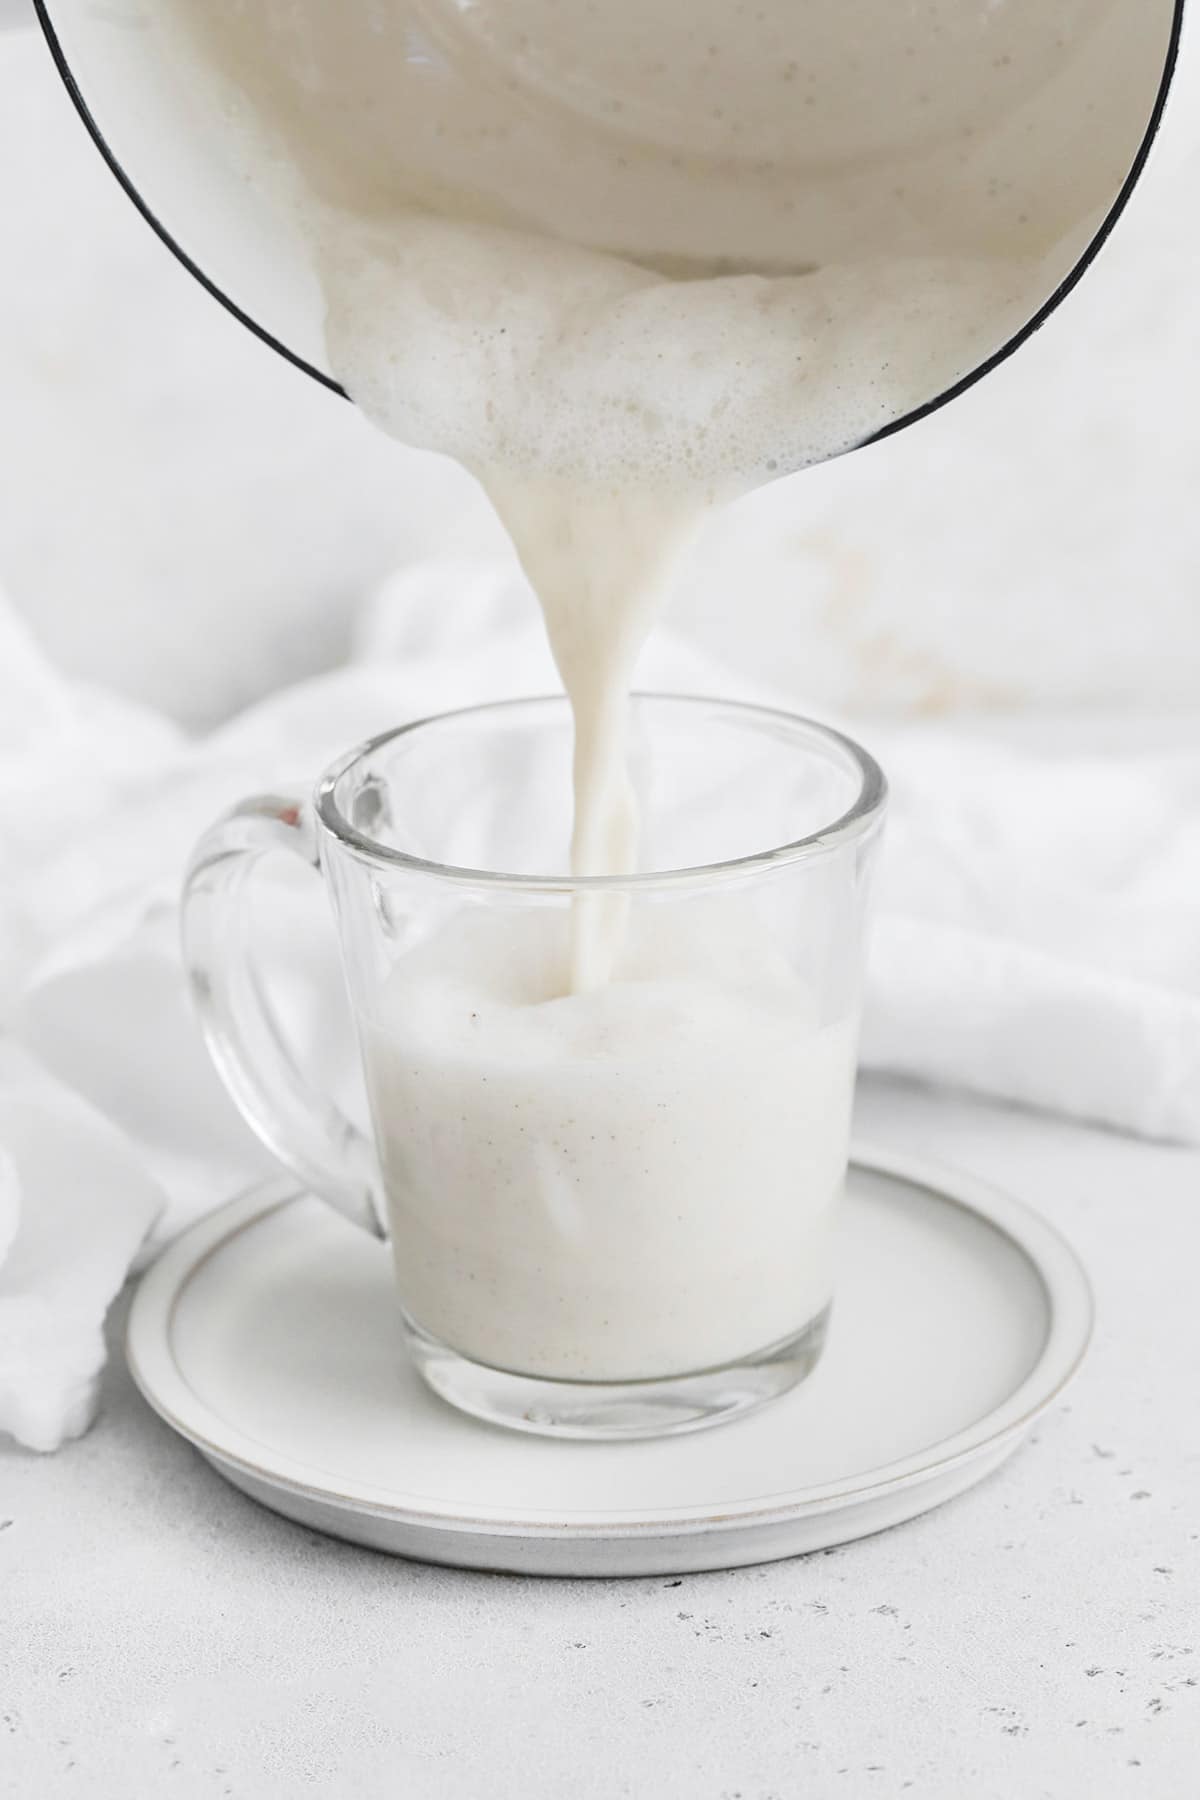 Pouring a vanilla steamer into a glass mug